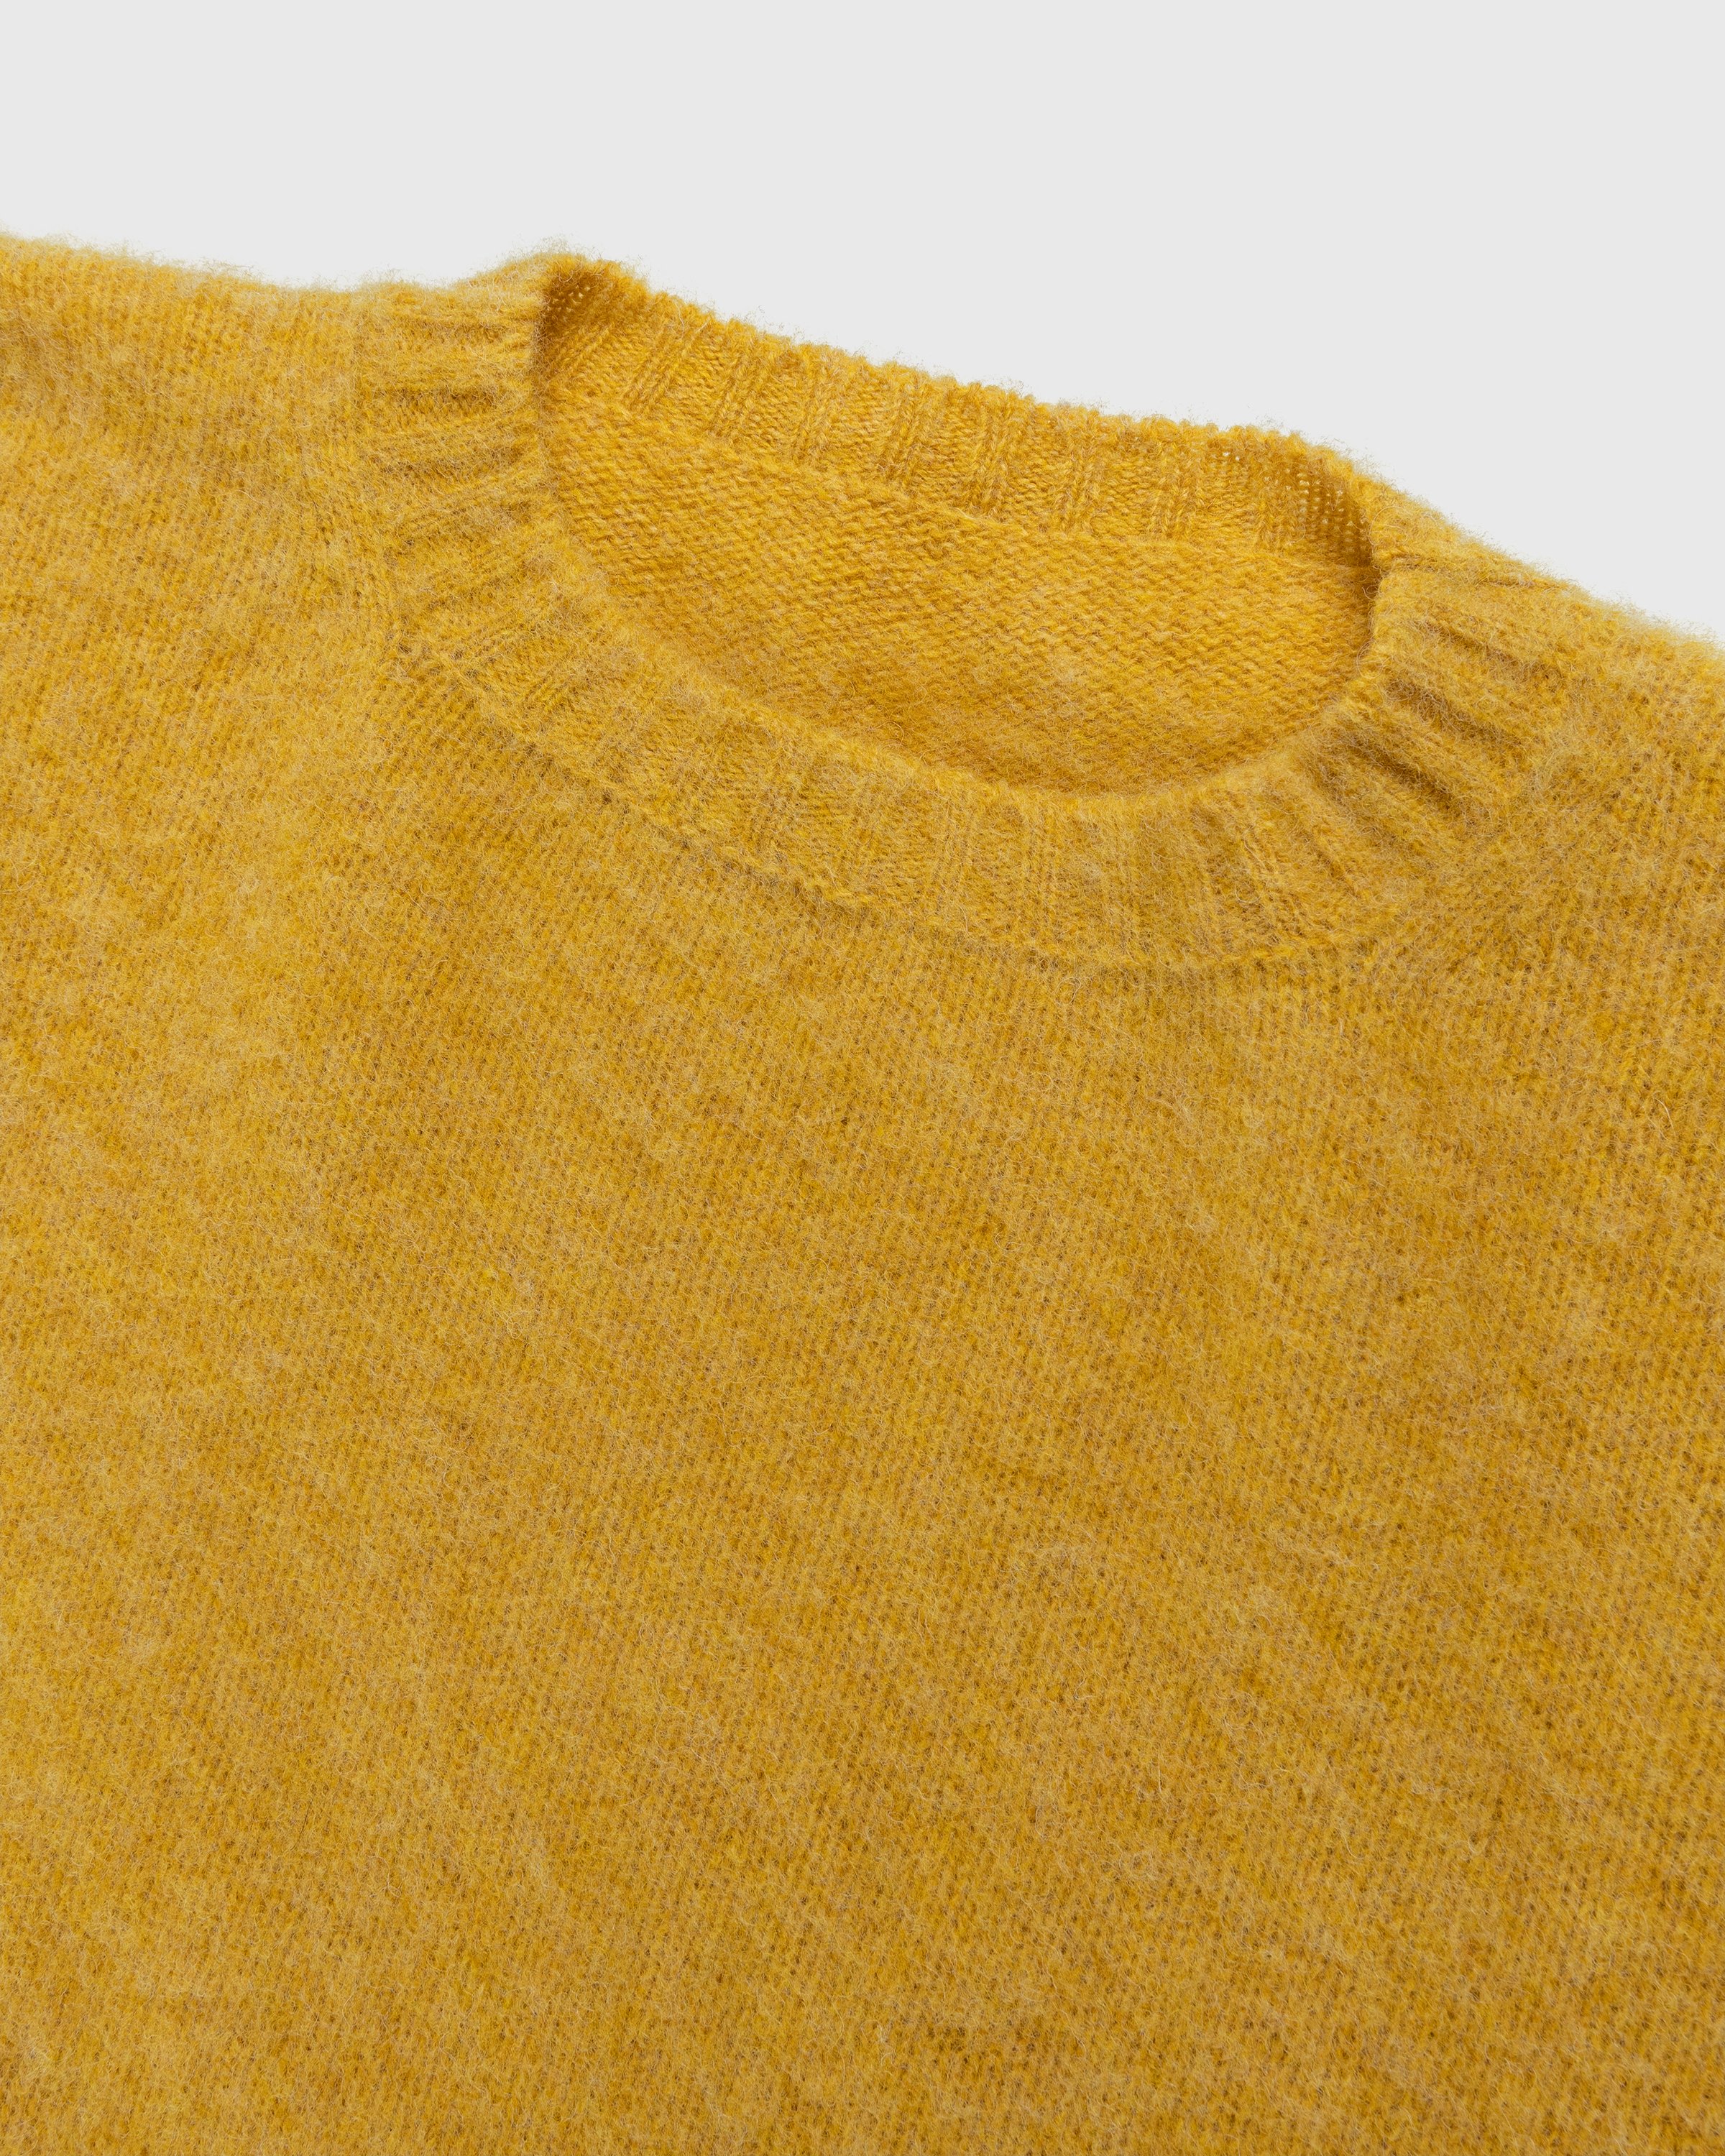 J. Press x Highsnobiety - Shaggy Dog Solid Sweater Yellow - Clothing - Yellow - Image 3